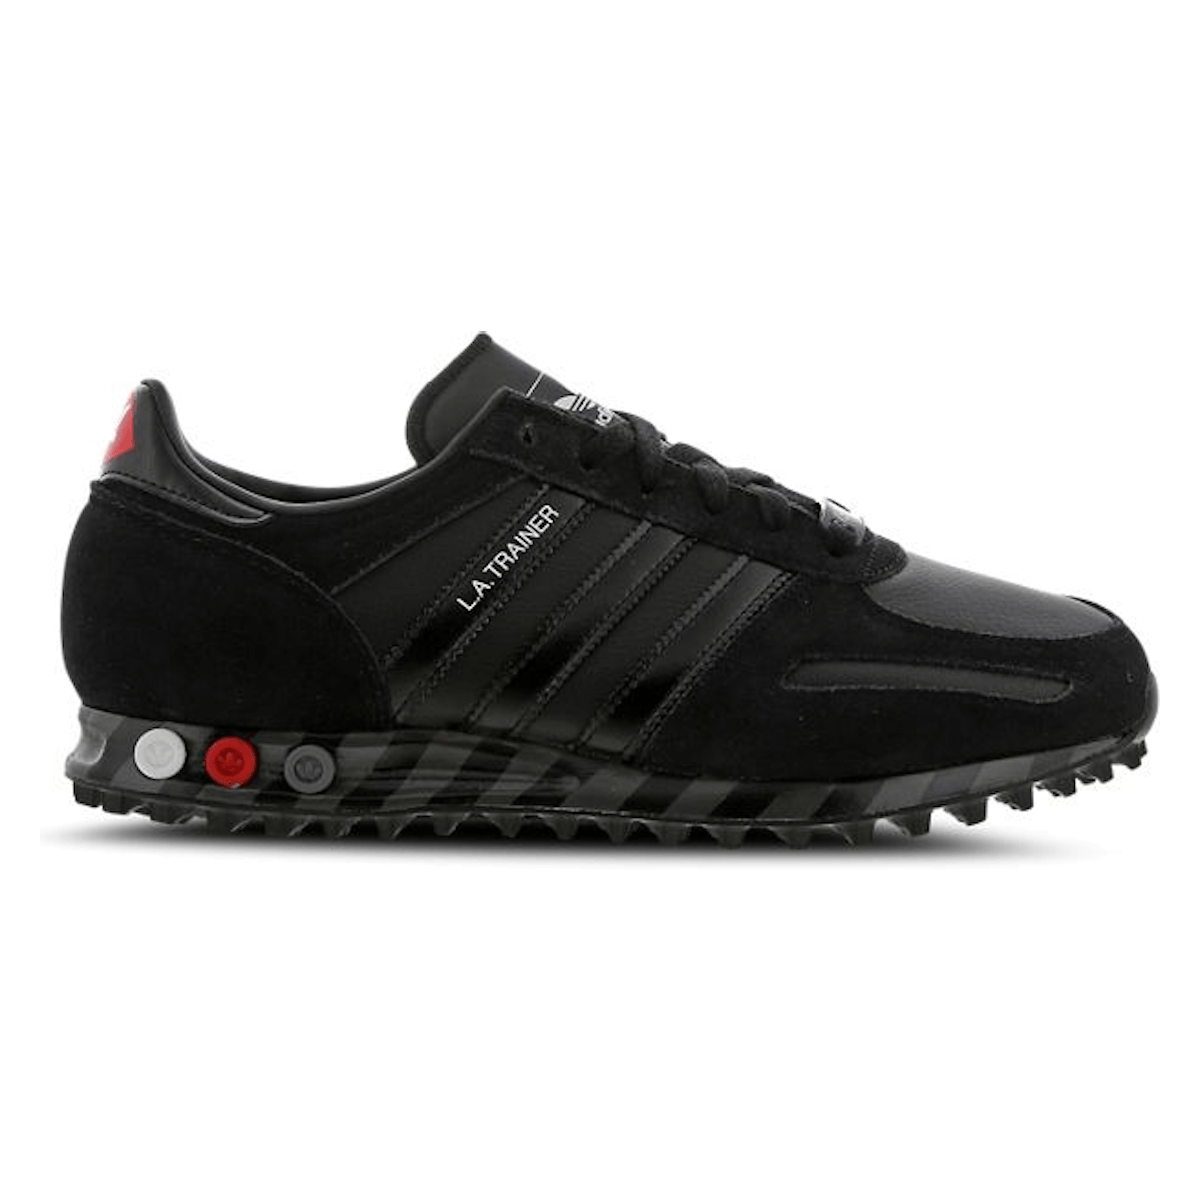 Adidas LA trainer "Black"